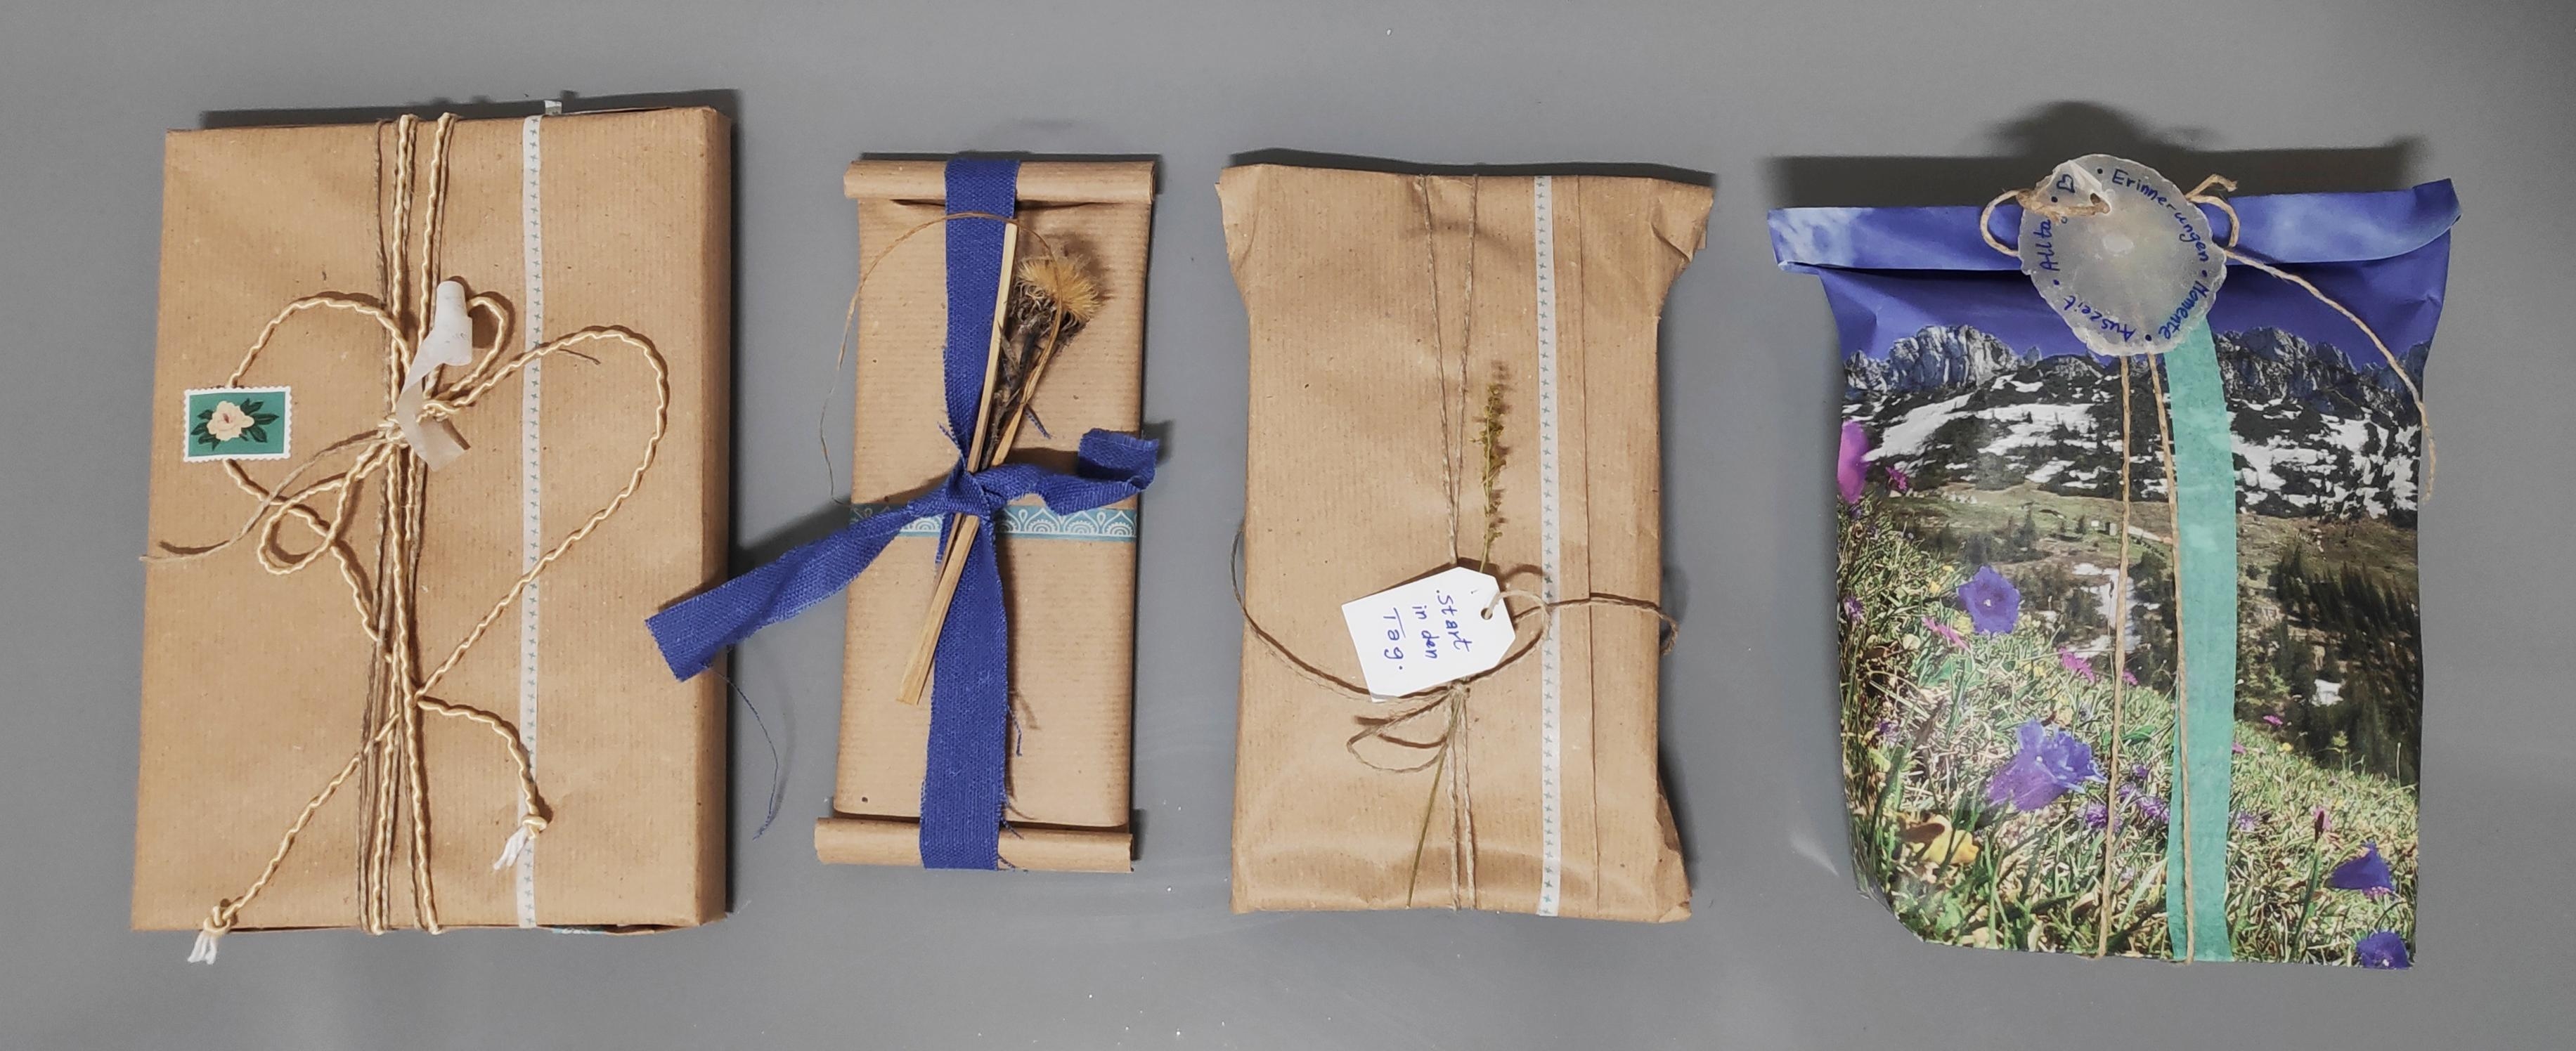 .Blumig.
#Geschenkverpackung #Trockenblumen #packen #Geschenk #schenken